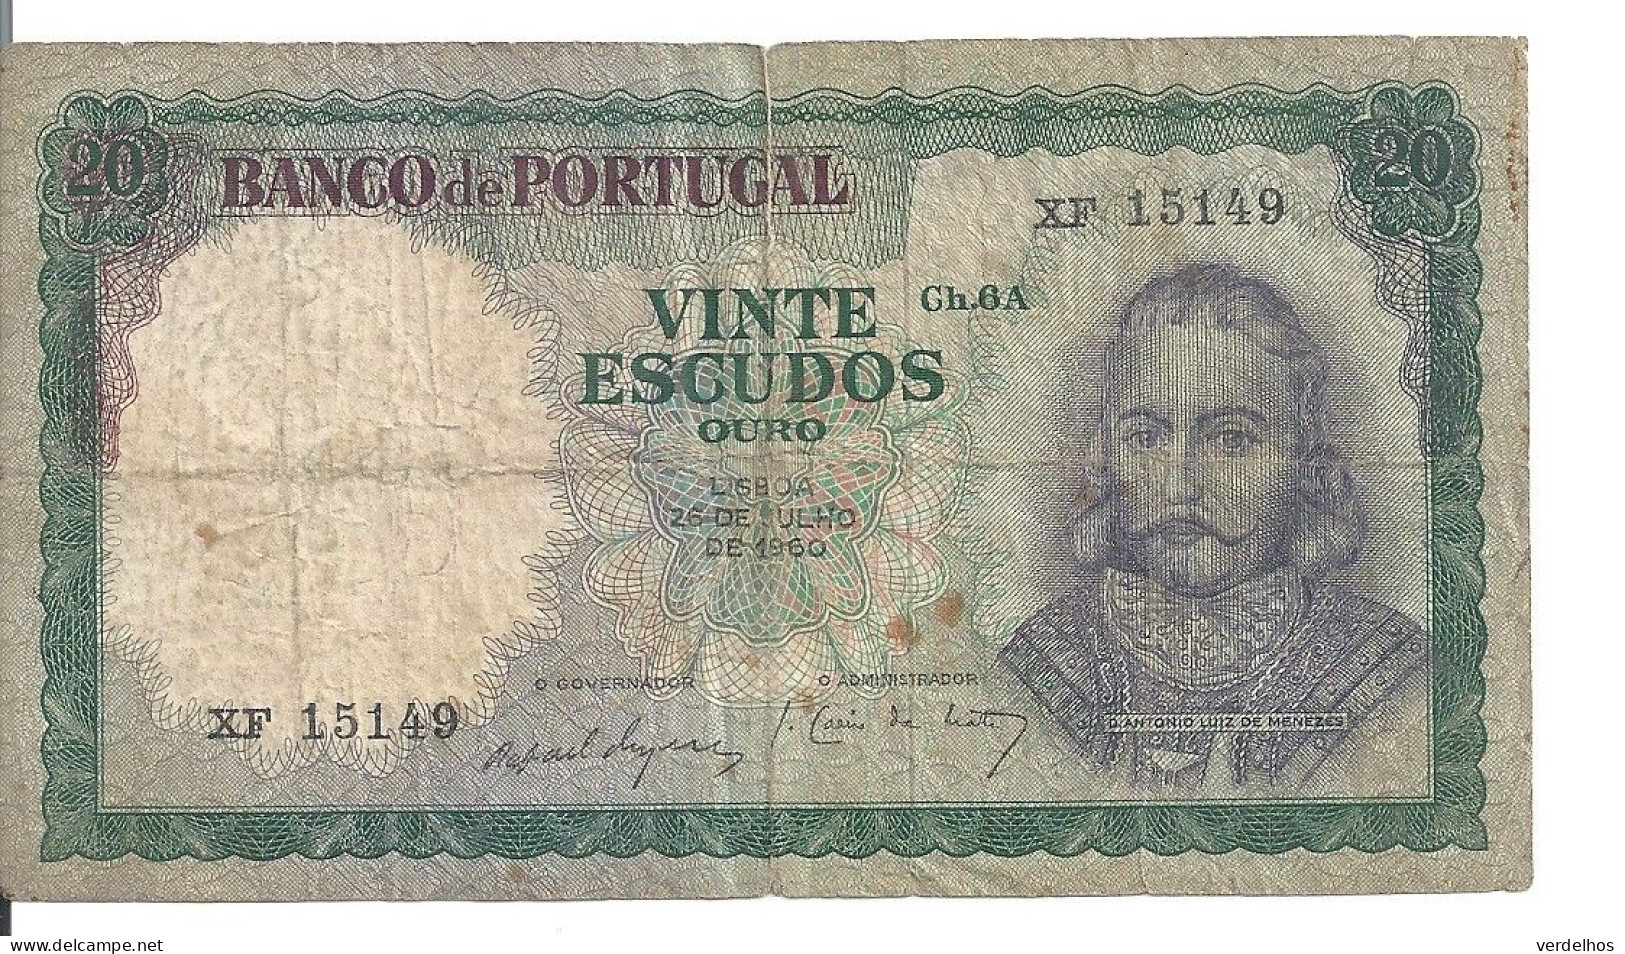 PORTUGAL 20 ESCUDOS 1960 VG+ P 163 - Portugal